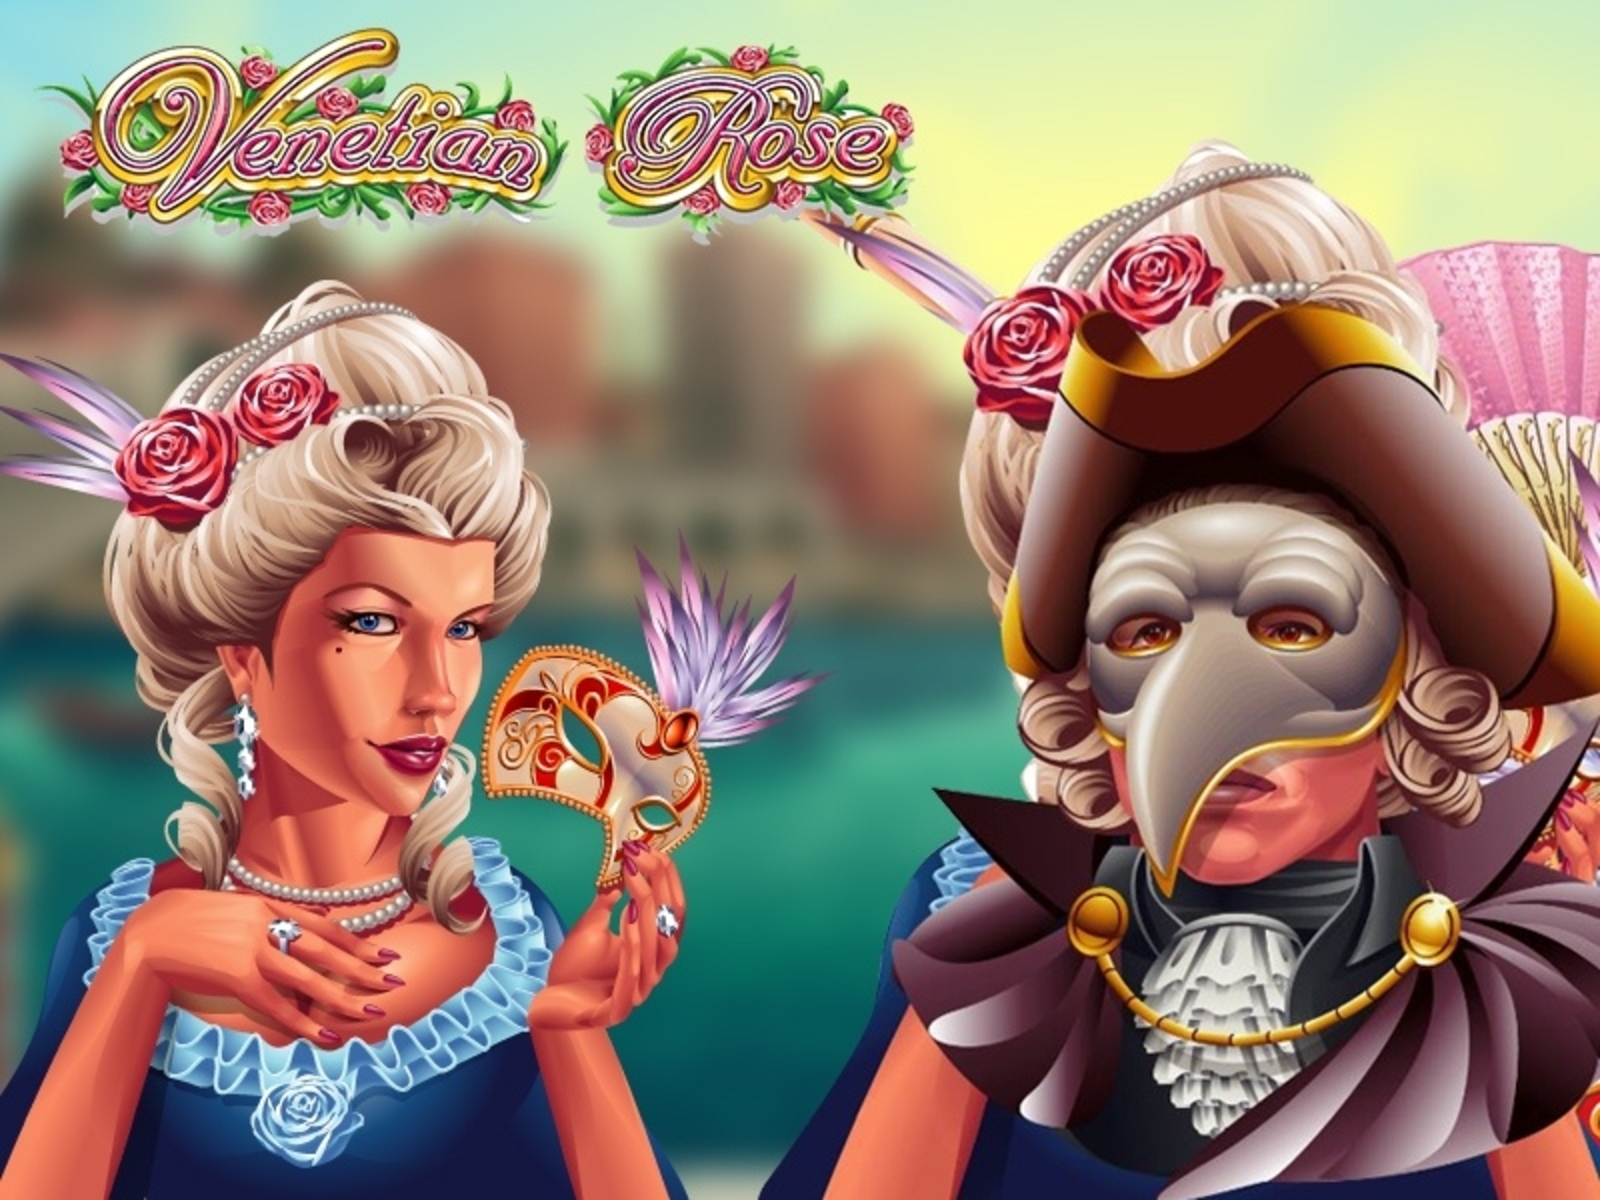 The Venetian Rose Online Slot Demo Game by NextGen Gaming